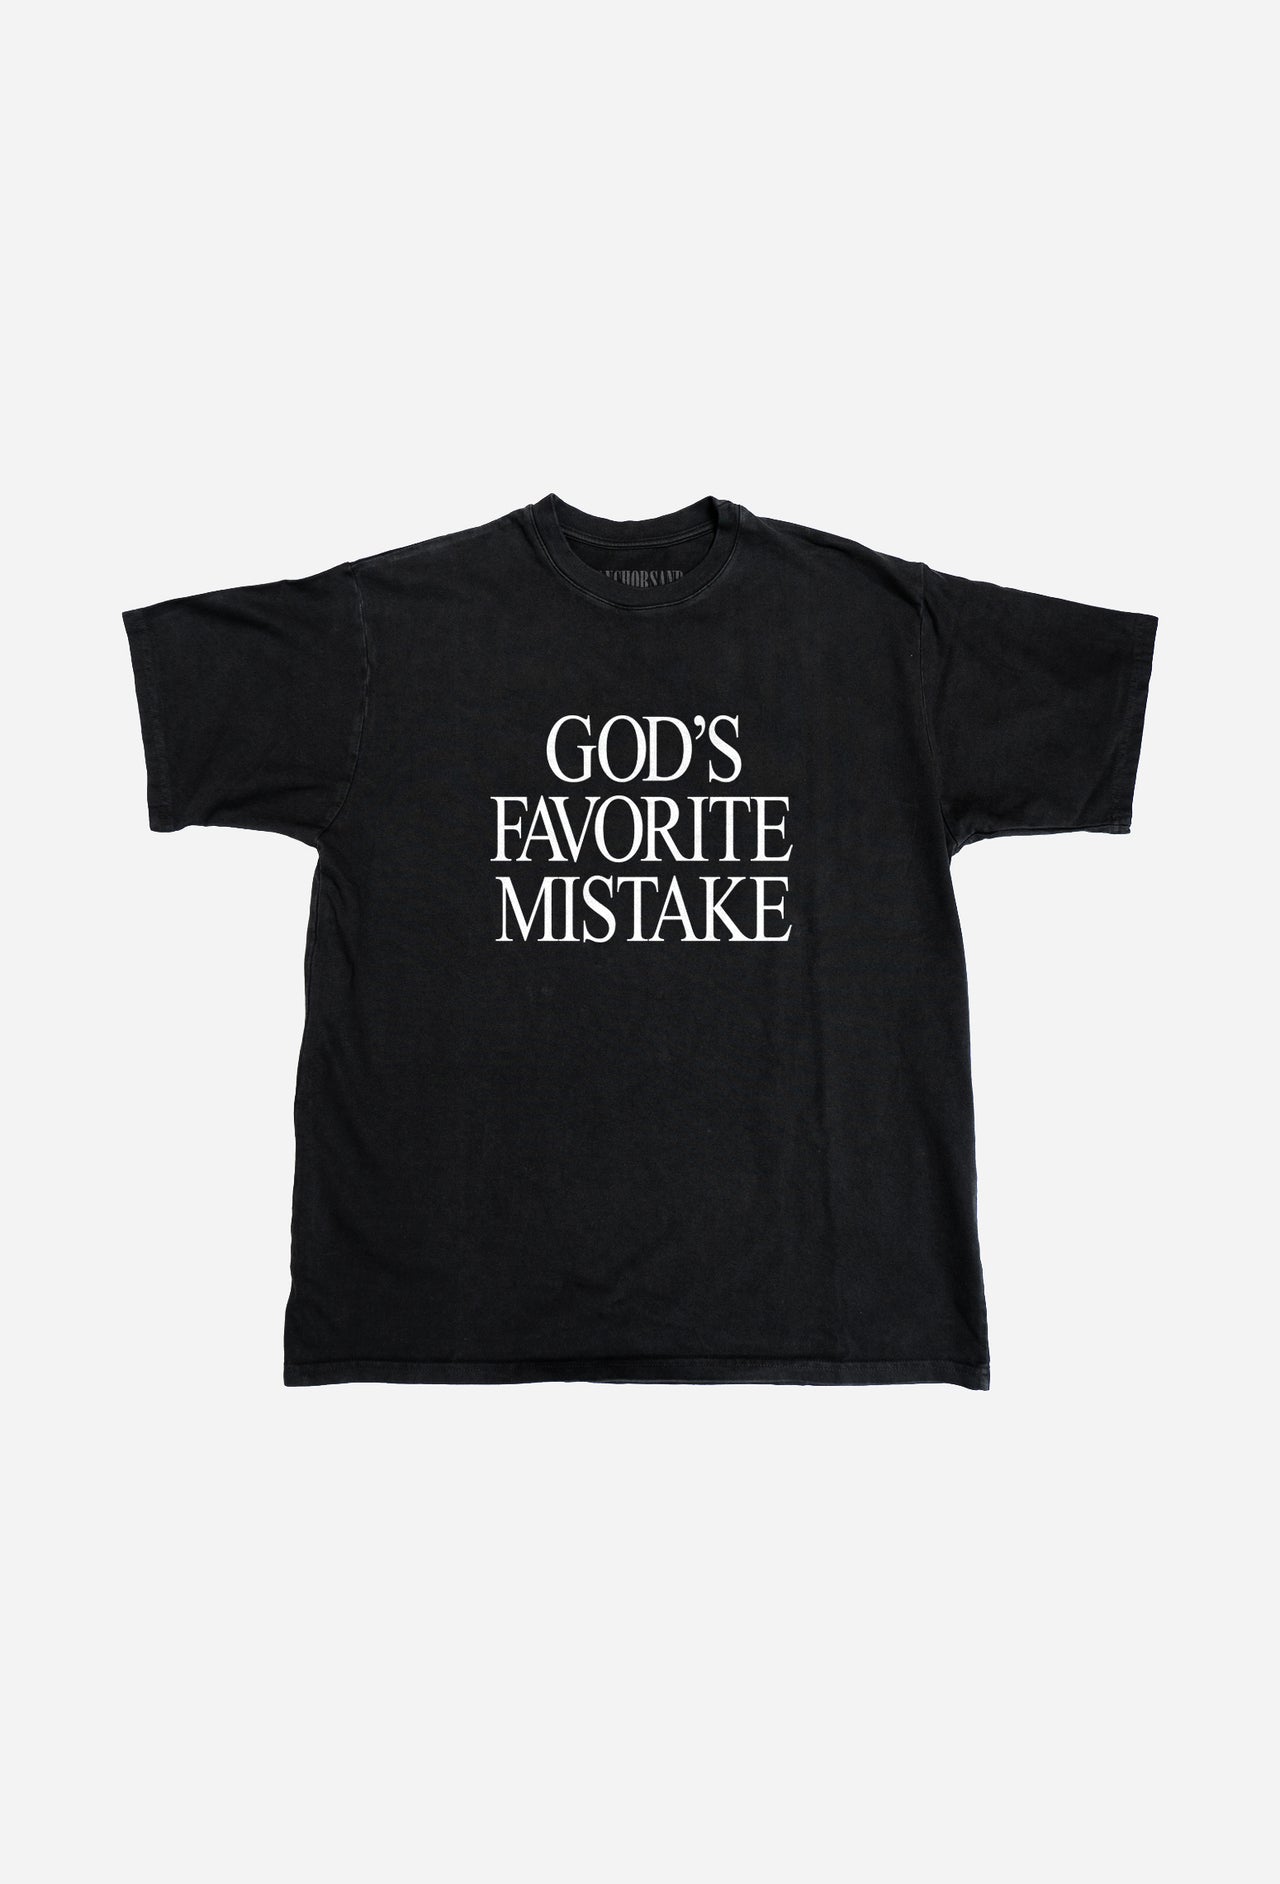 GOD'S FAVORITE MISTAKE T-SHIRT